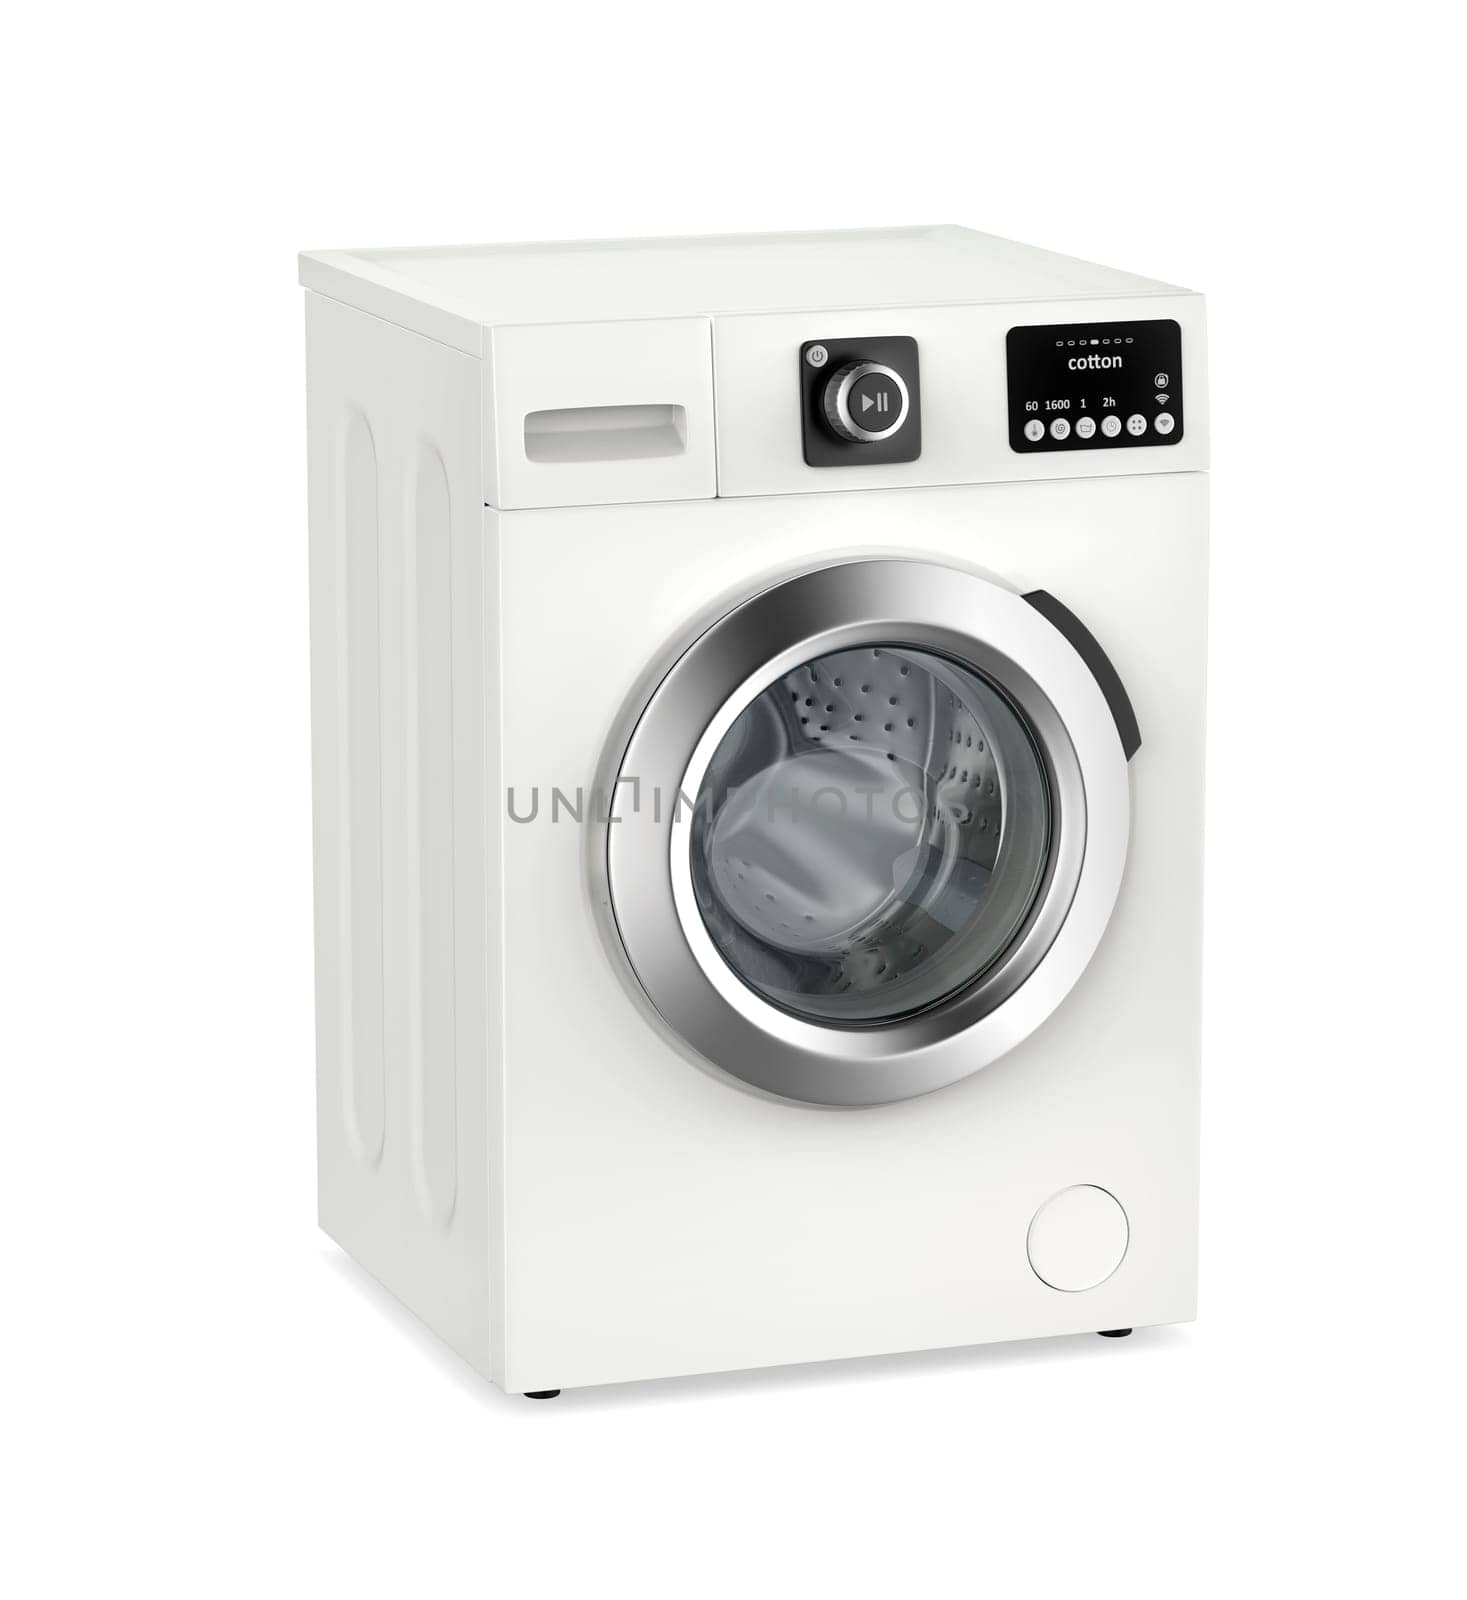 Digital washing machine by magraphics